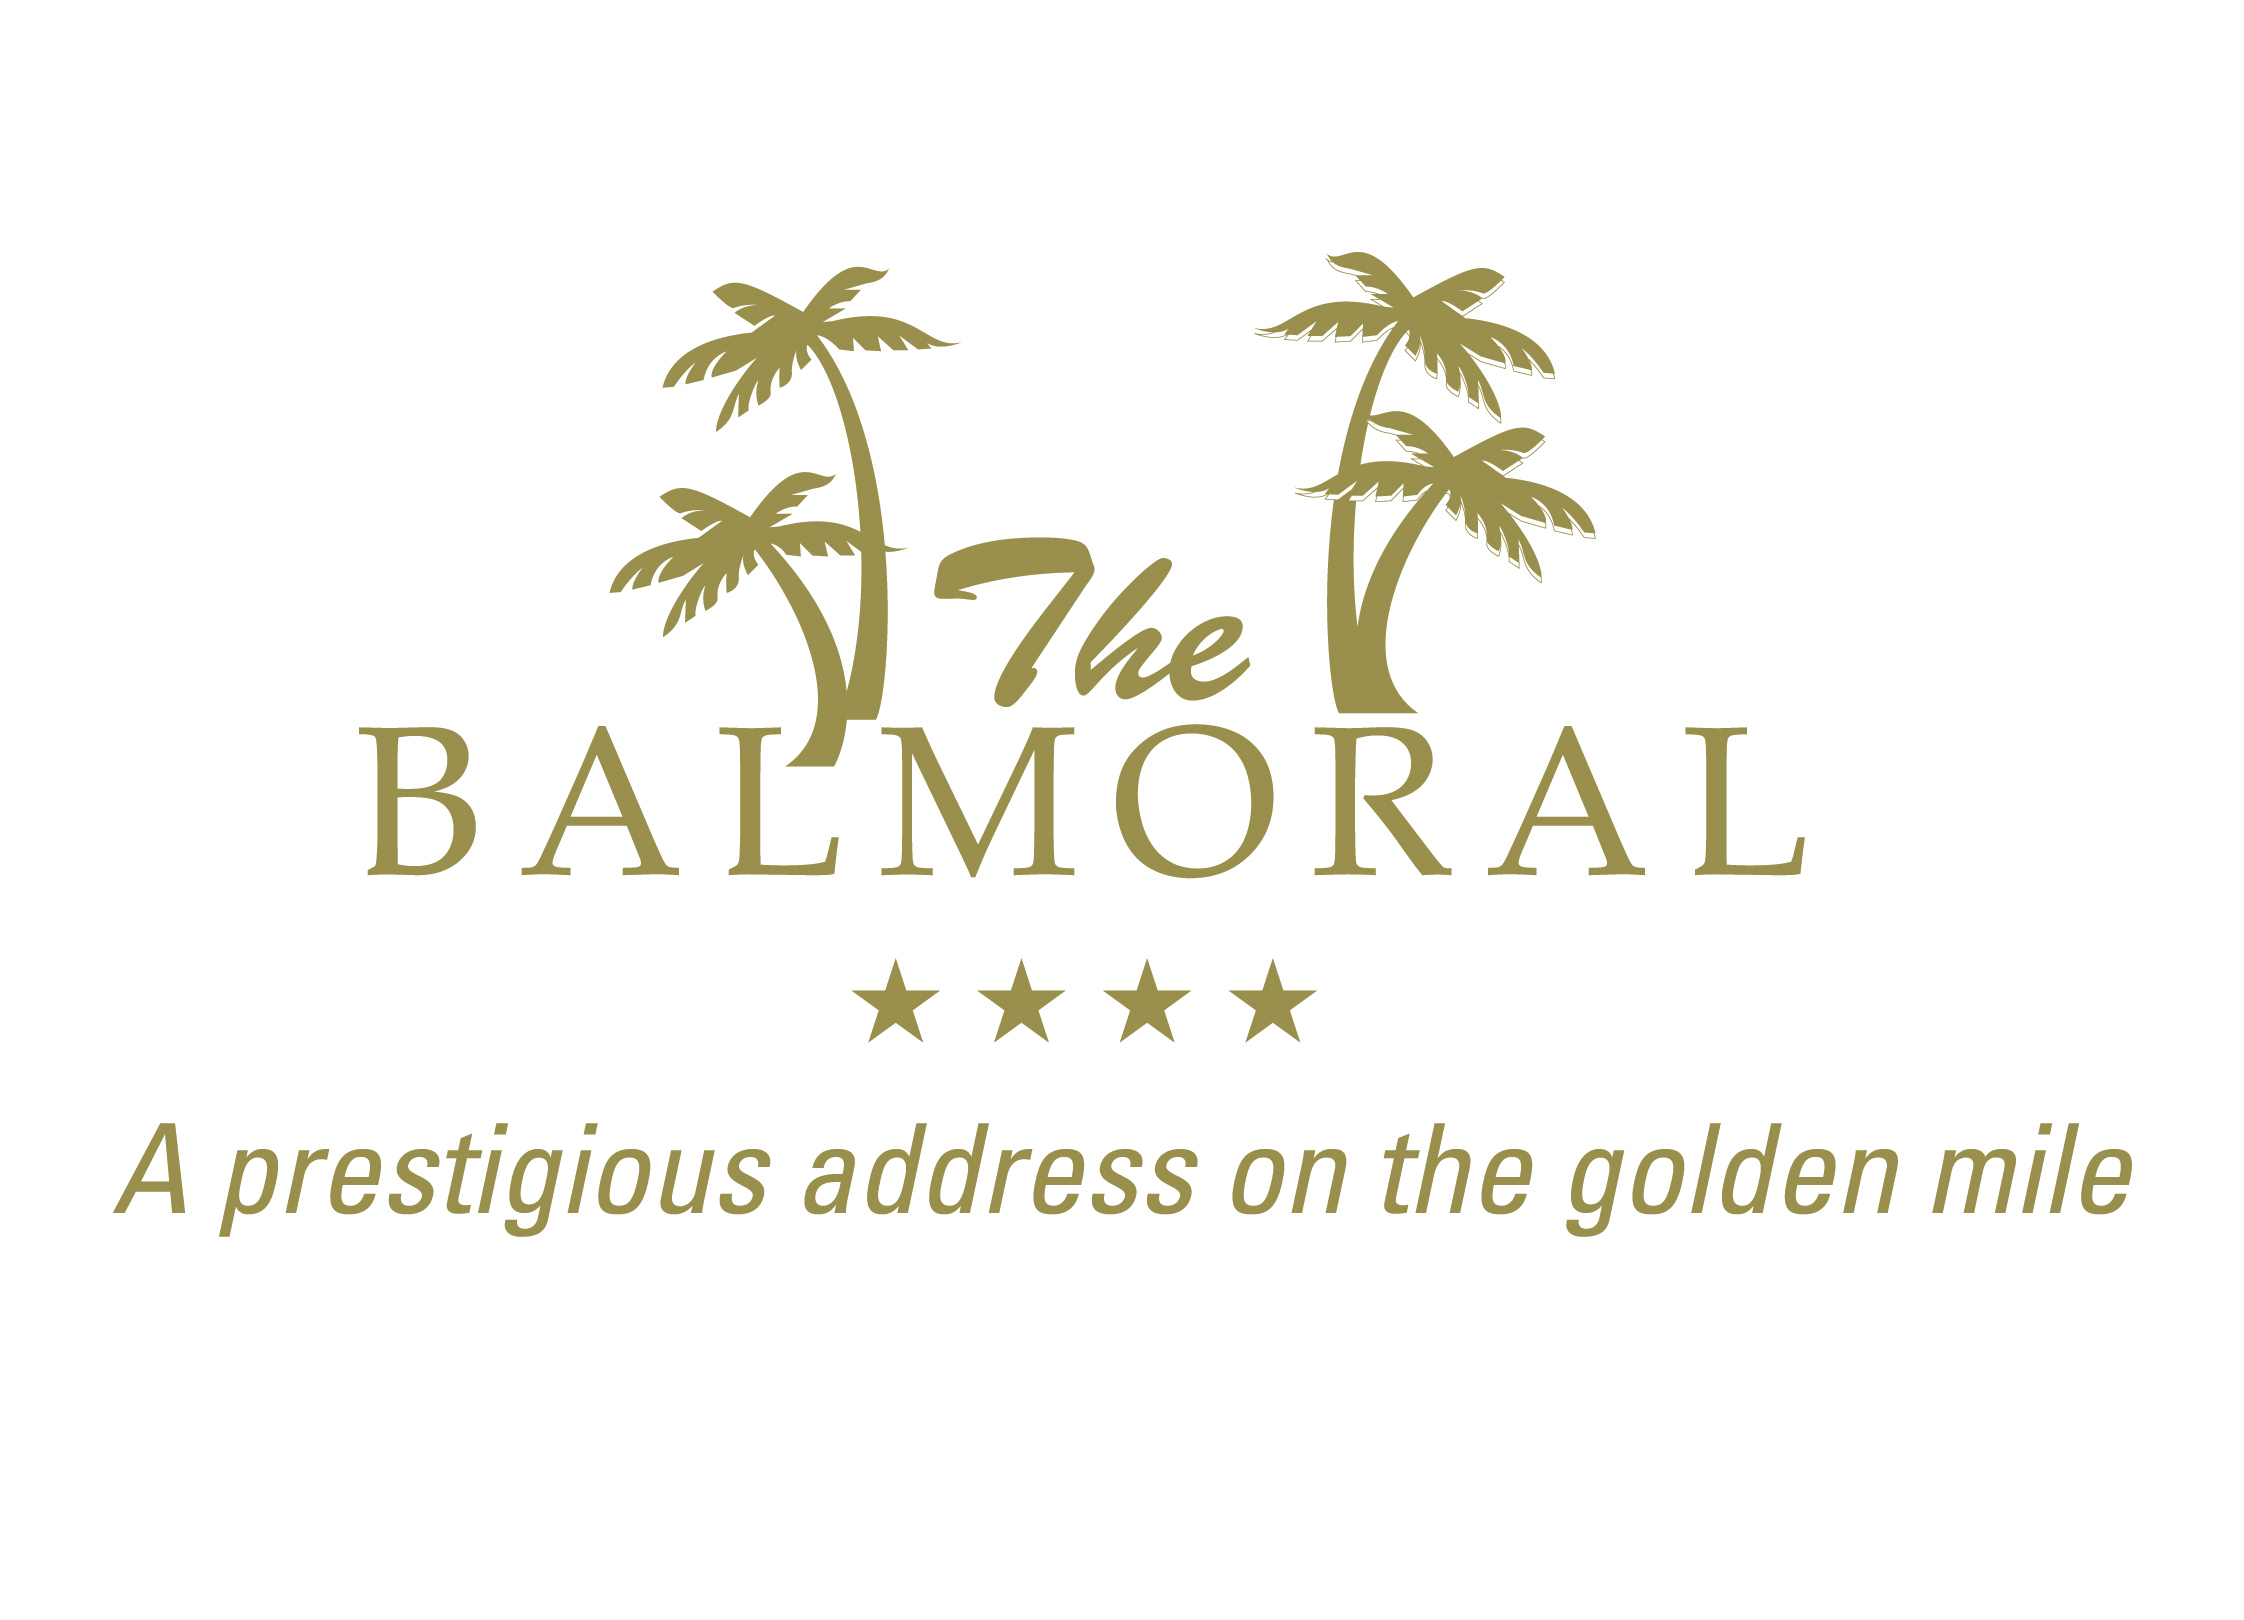  The Balmoral Hotel